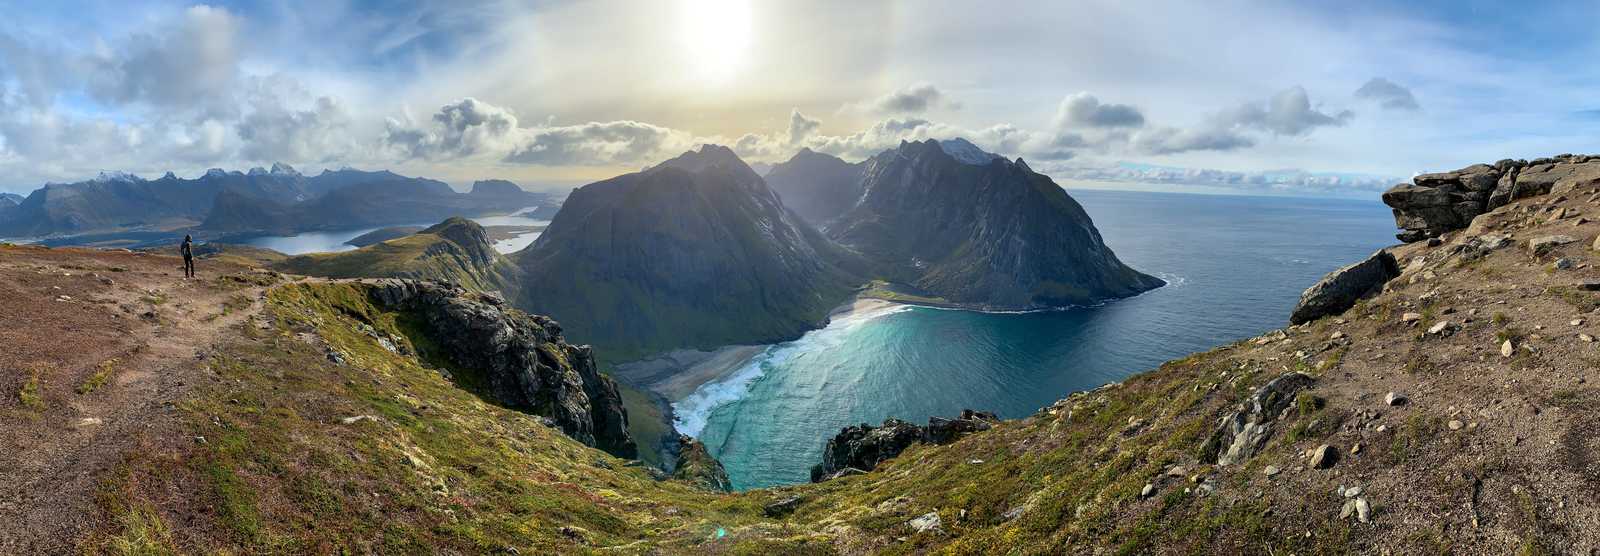 Image la grande traversee de la norvege